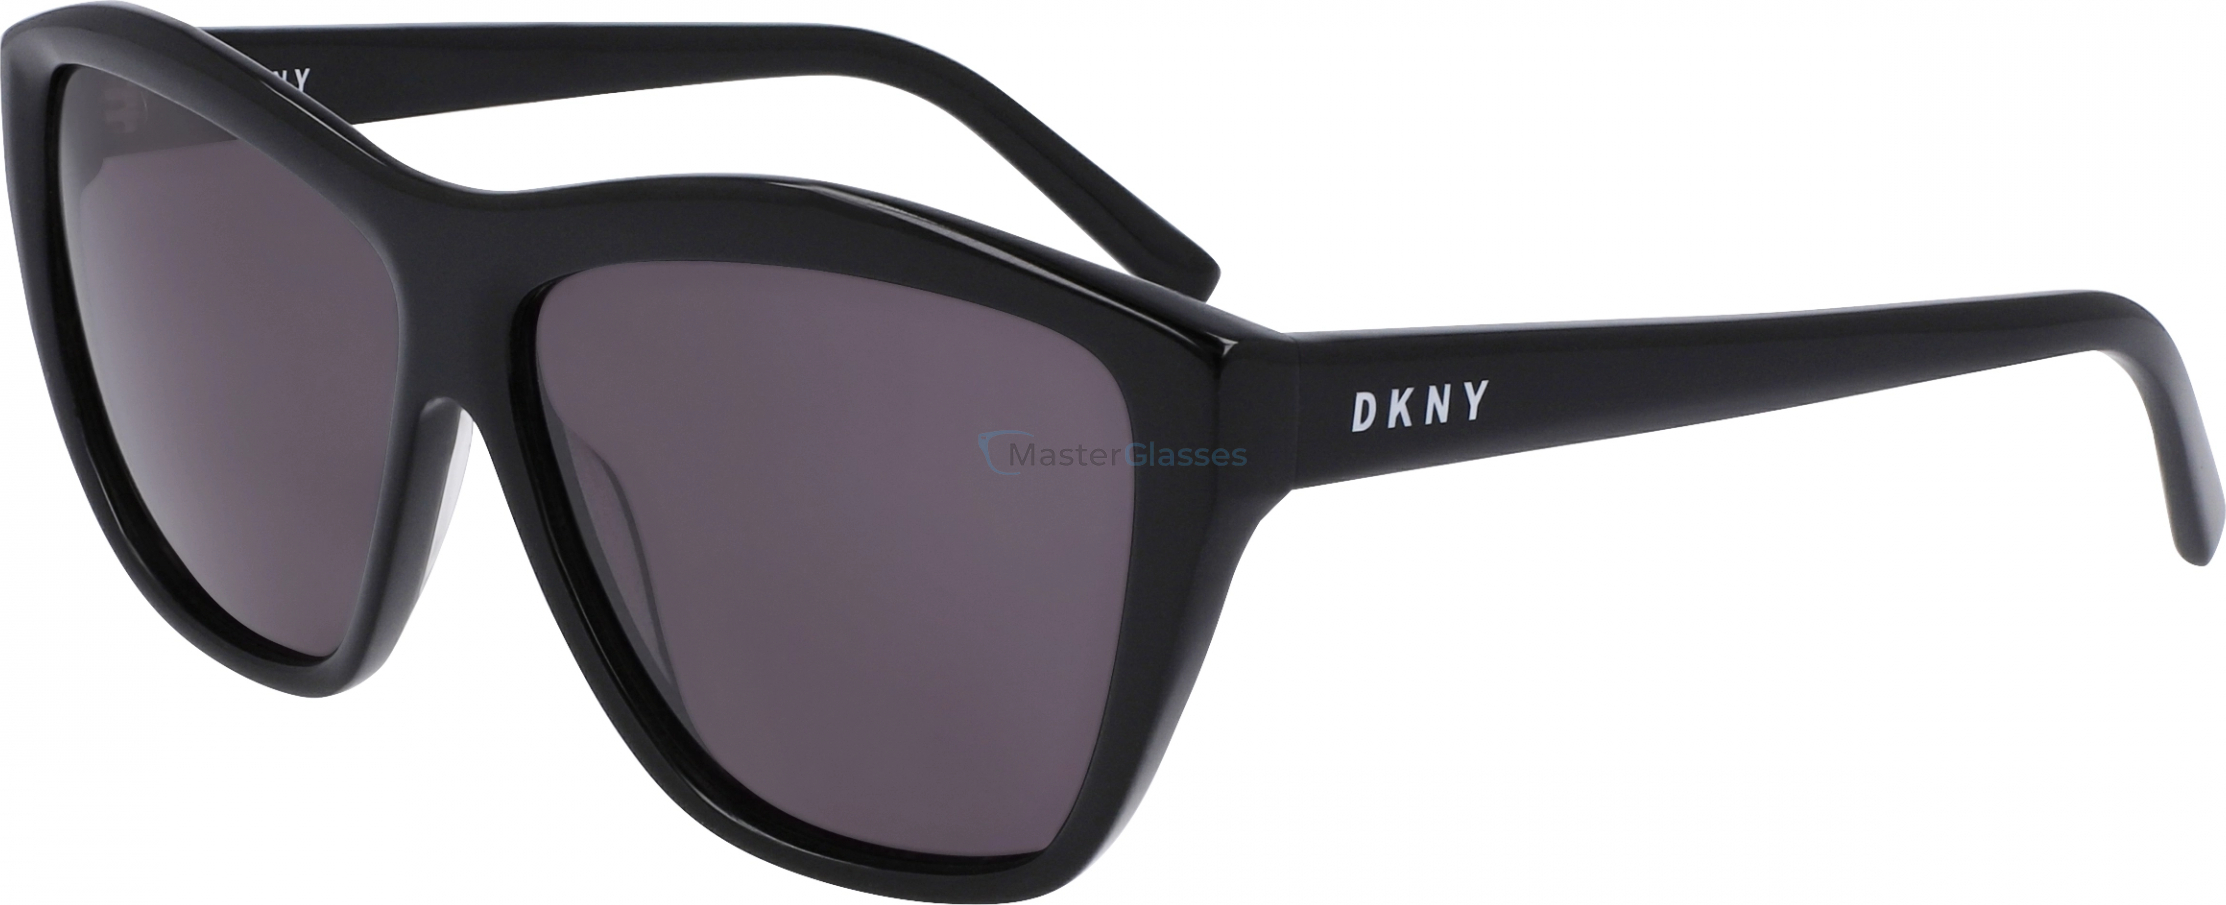   DKNY DK544S 001,  BLACK, GREY